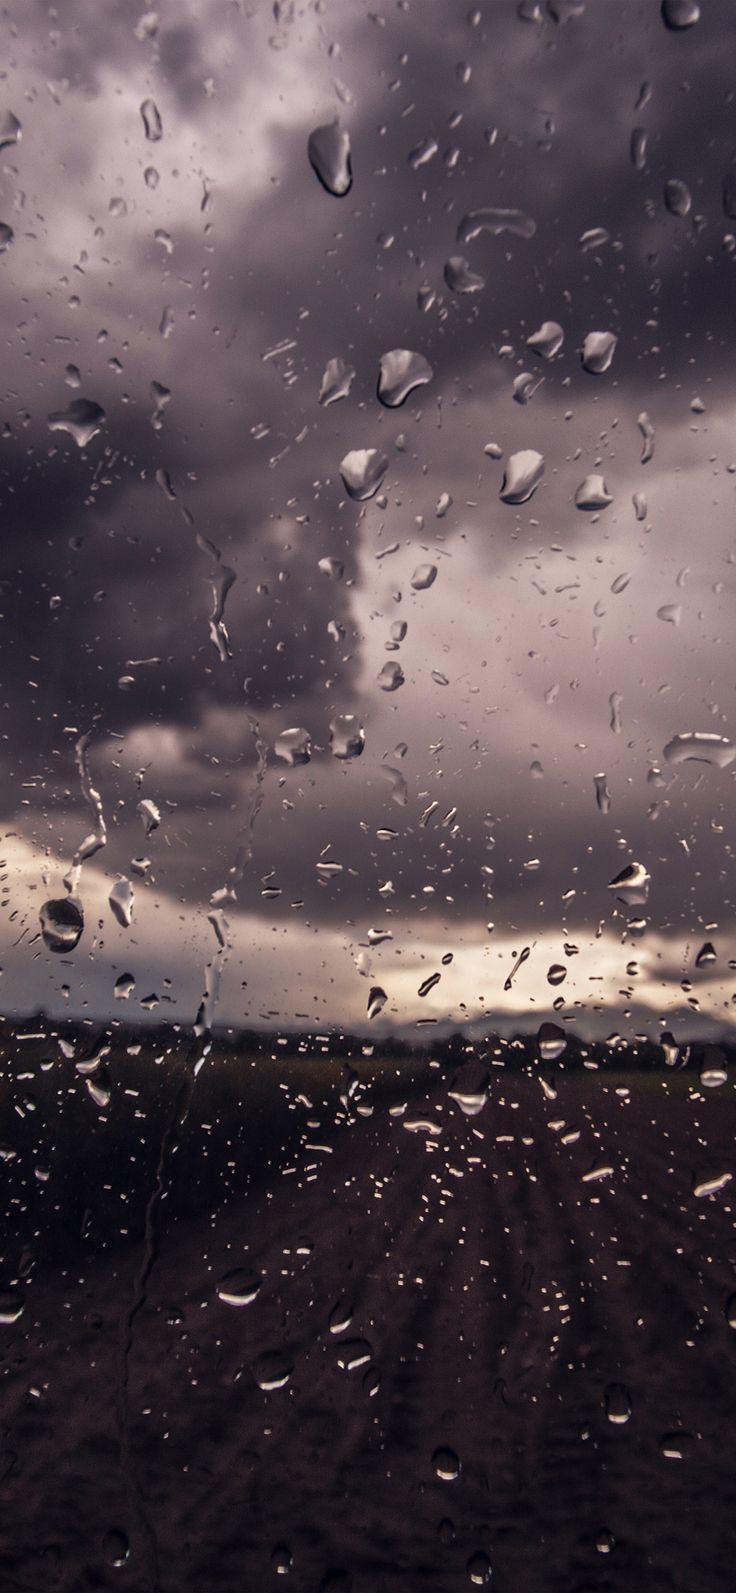 iPhone X wallpaper, rainy window nature water drop